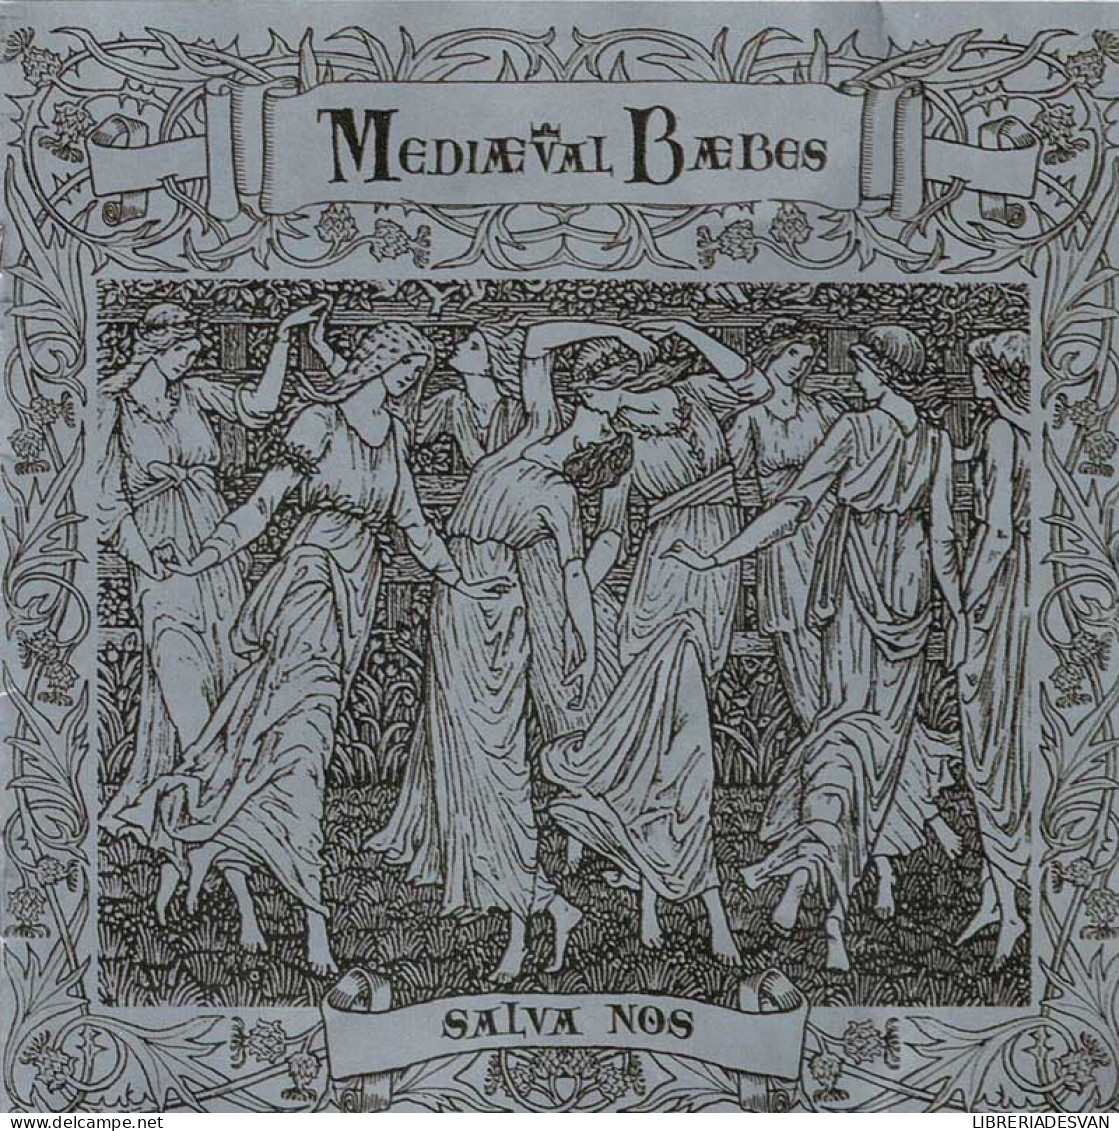 Mediæval Bæbes - Salva Nos. CD - Classical